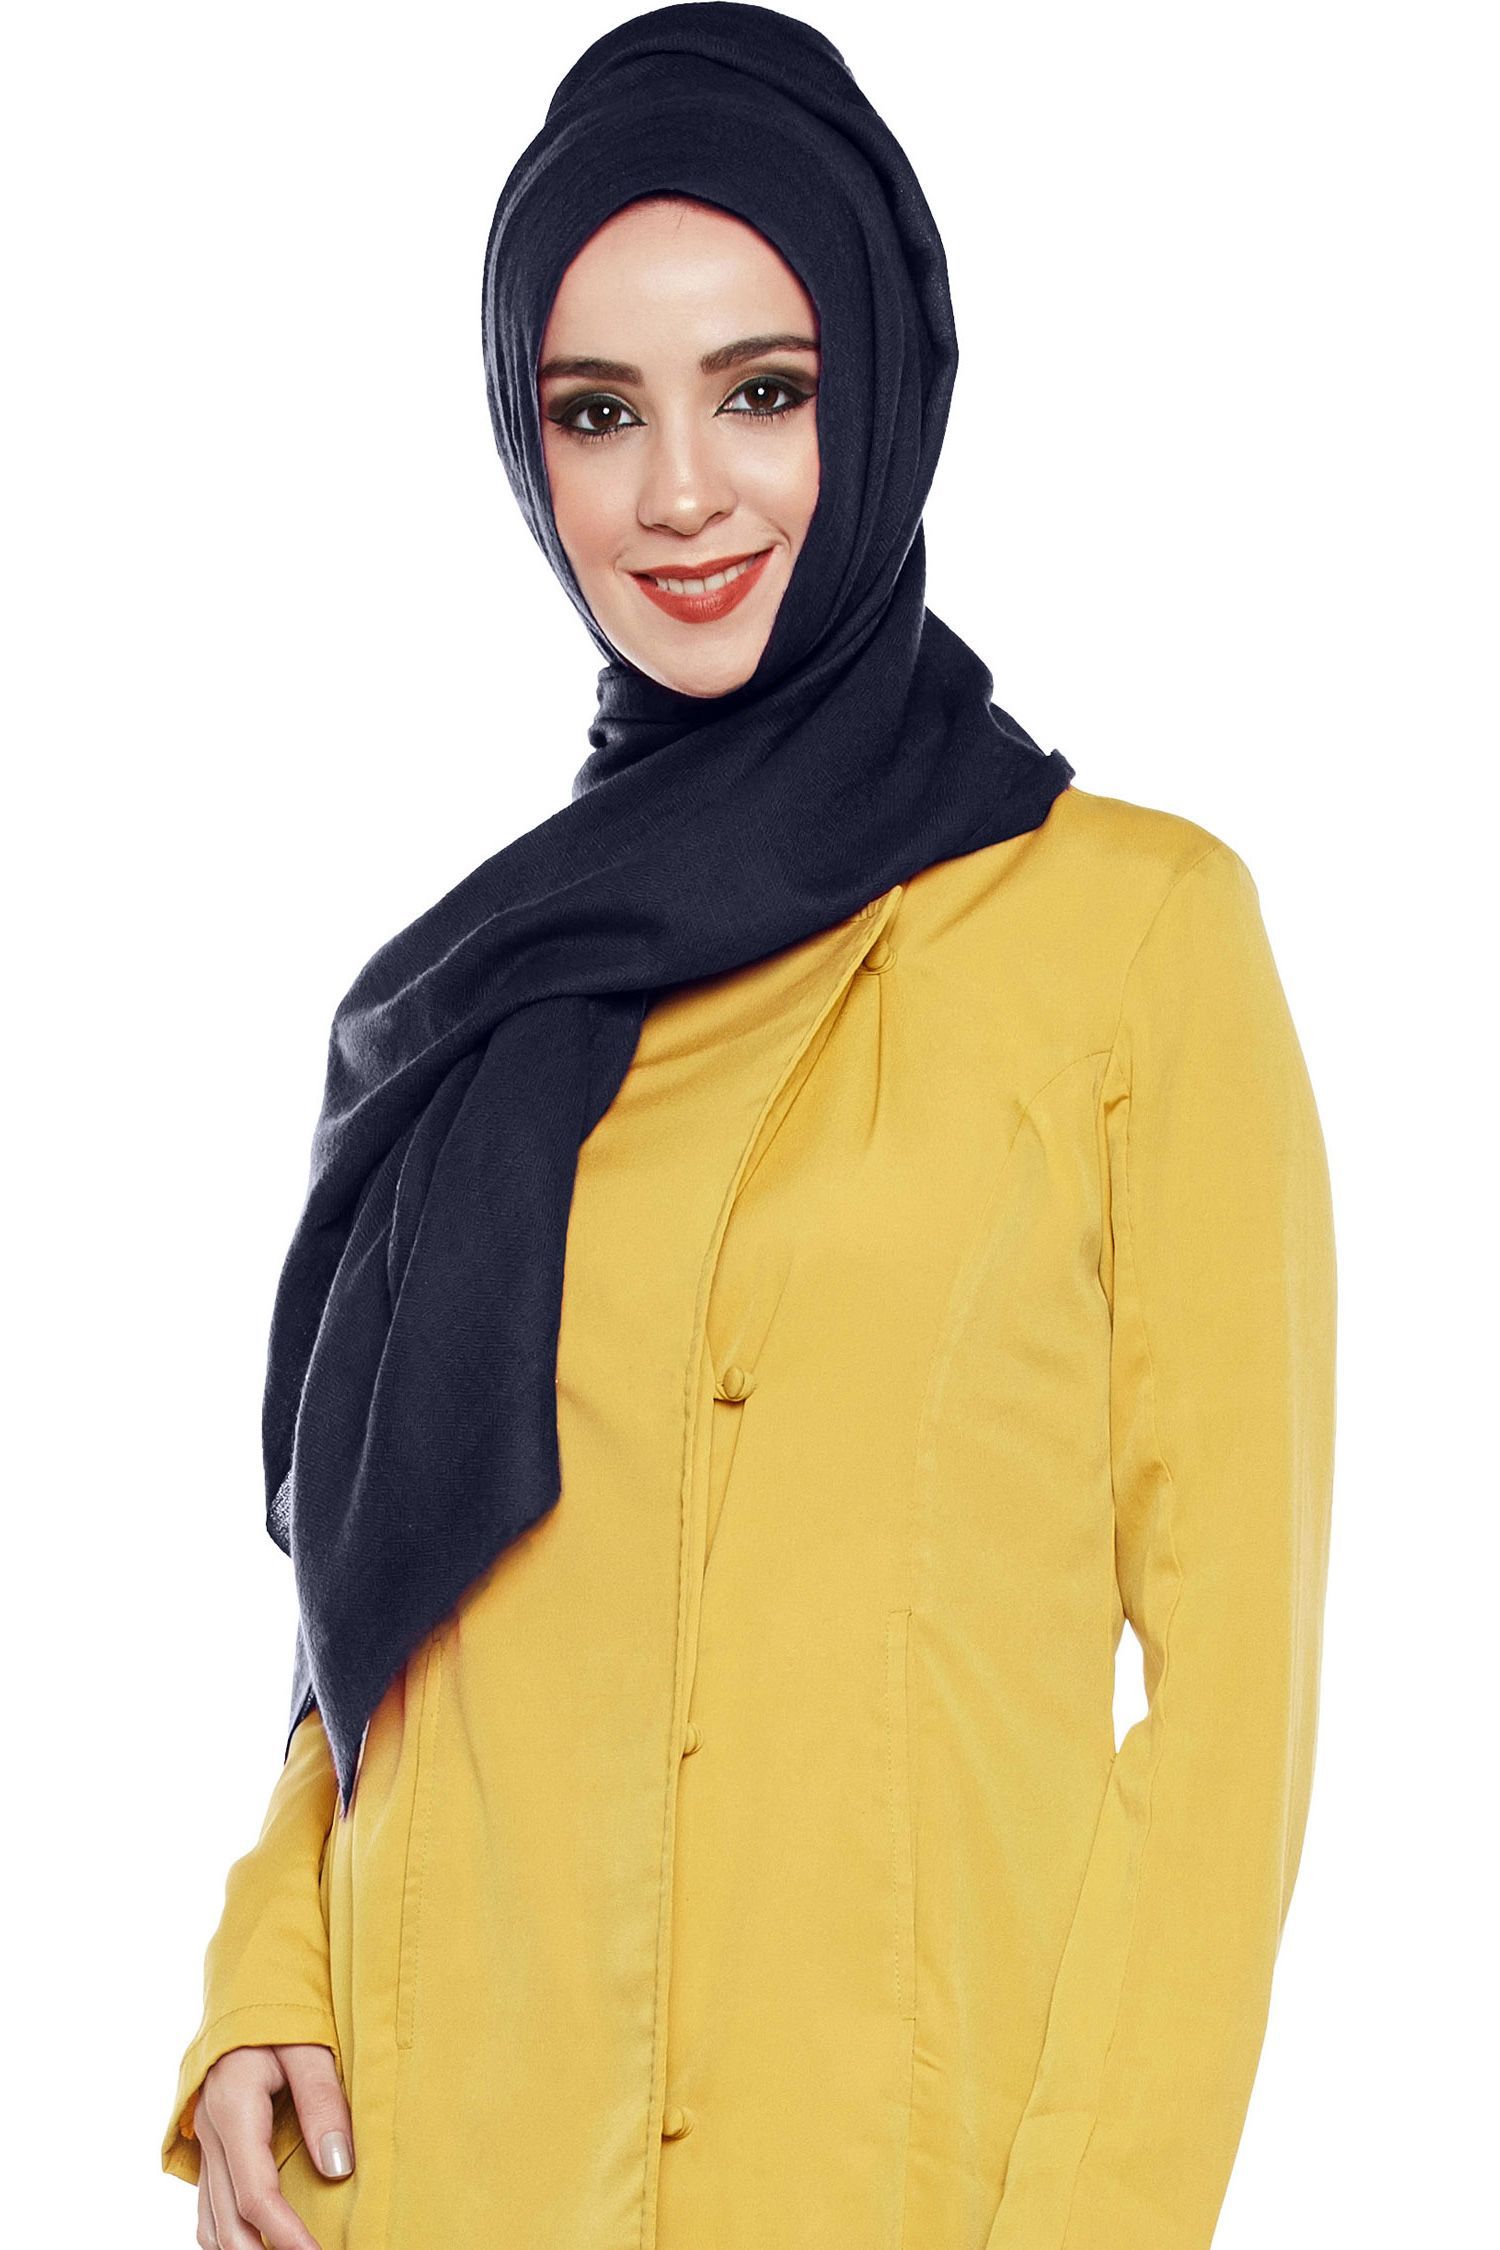 Navy Blue Pashmina Hijab | Handmade Cashmere Head Scarf